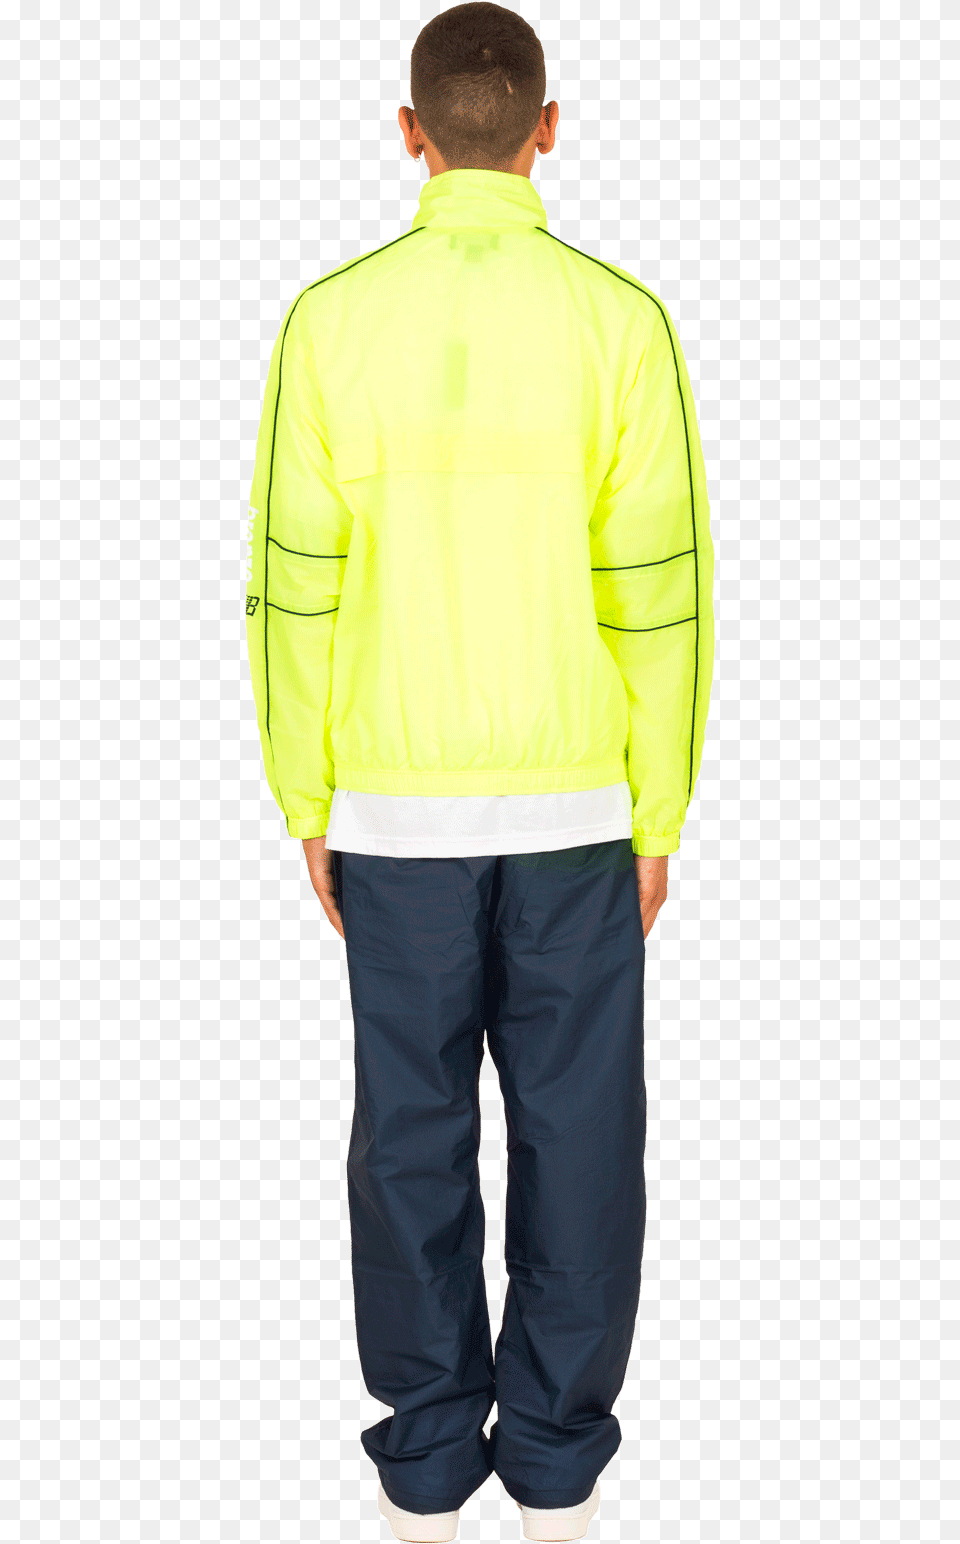 Bronze 56k Coats Amp Jackets Sport Jacket Yellow Jacket Pocket, Clothing, Coat, Adult, Male Free Transparent Png